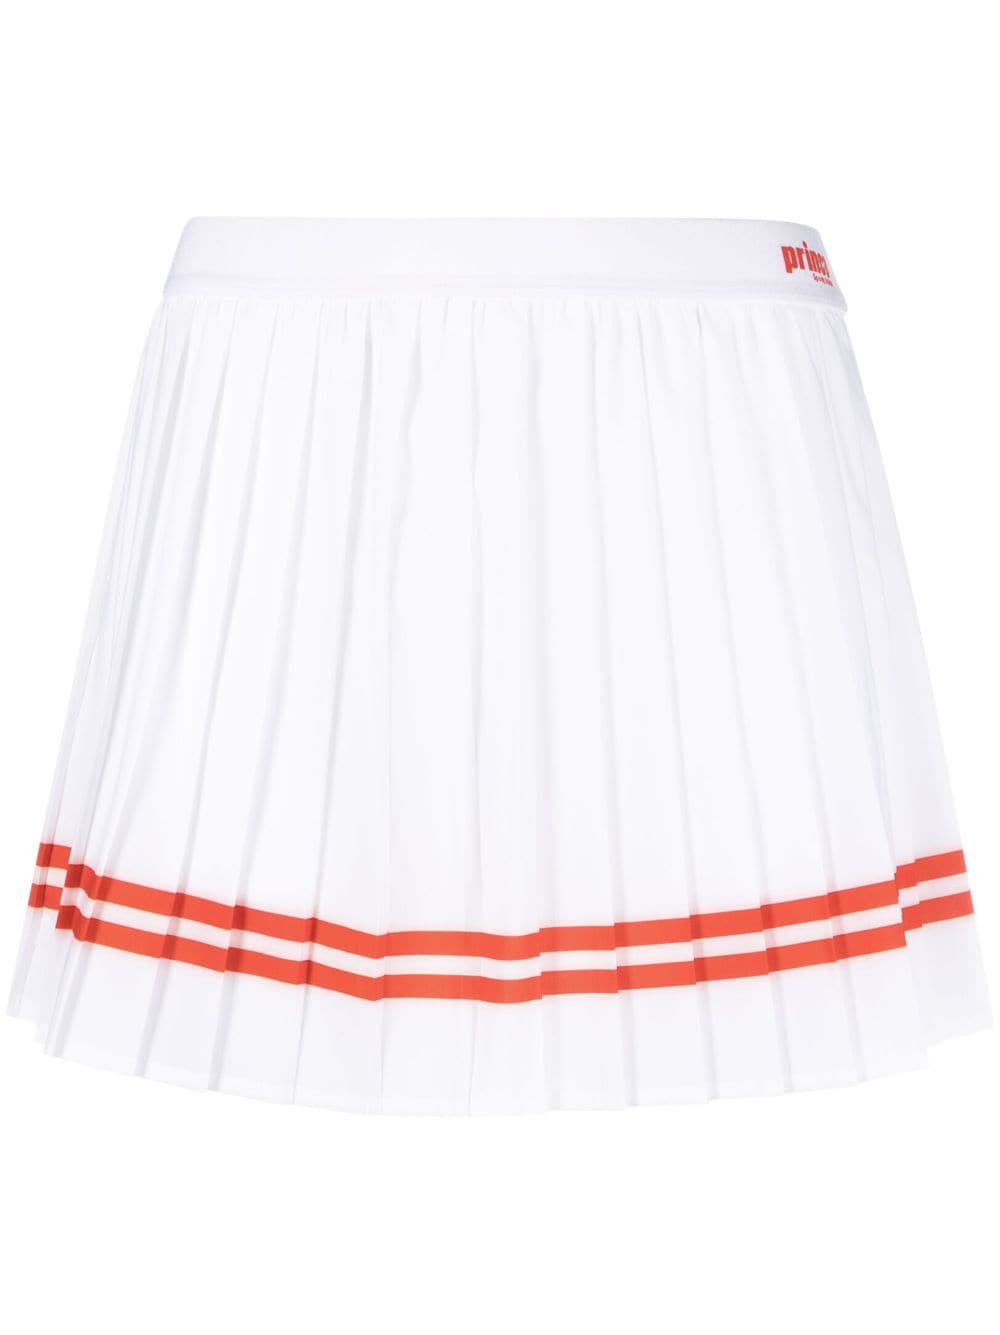 Sporty & Rich x Prince pleated tennis skirt - White von Sporty & Rich